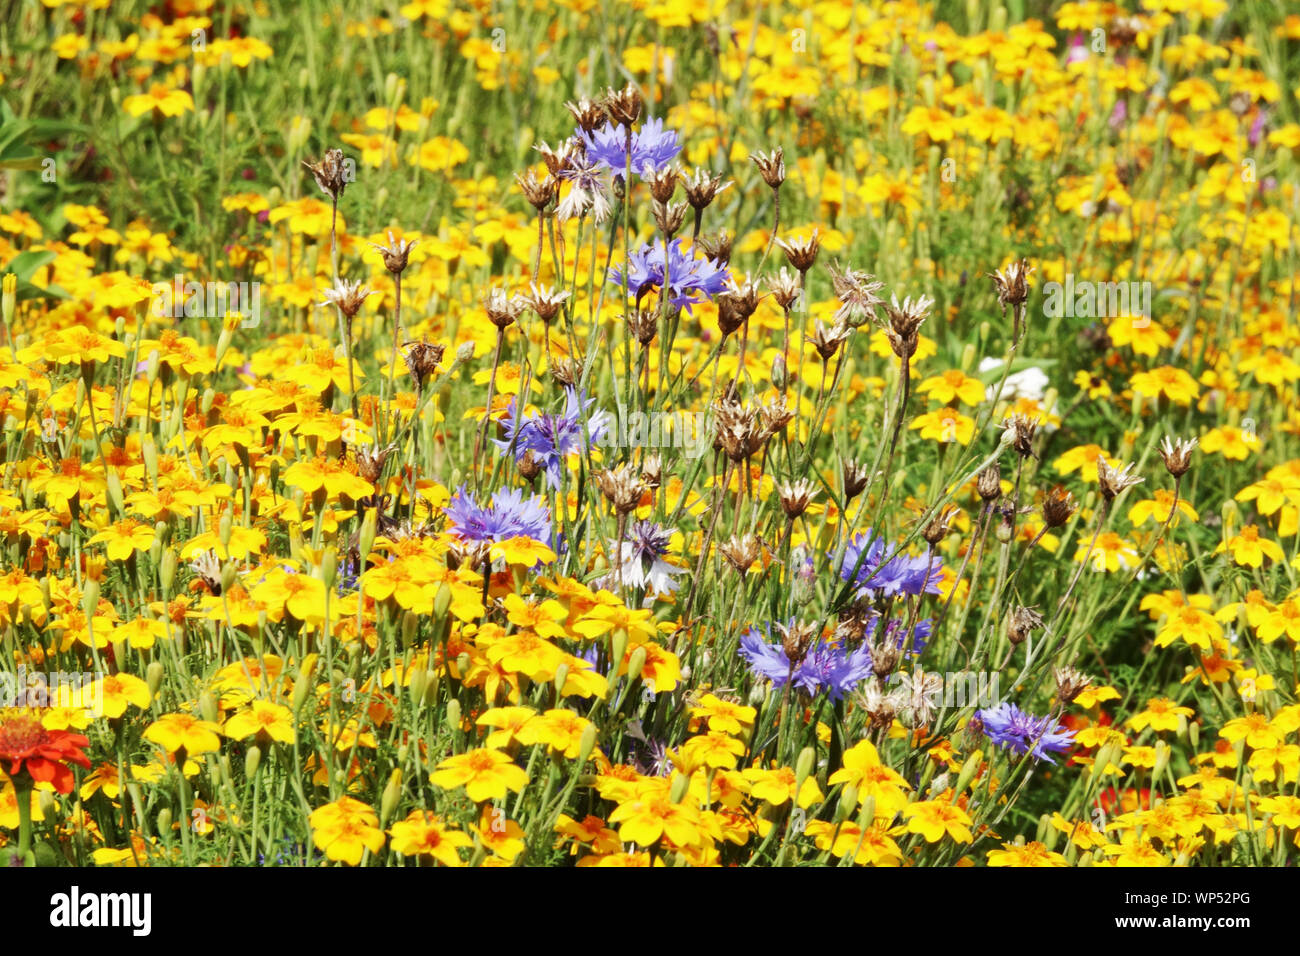 Summer garden flowers, Blue Bachelor's Button Centaurea cyanus, Yellow tagetes, Marigolds Stock Photo